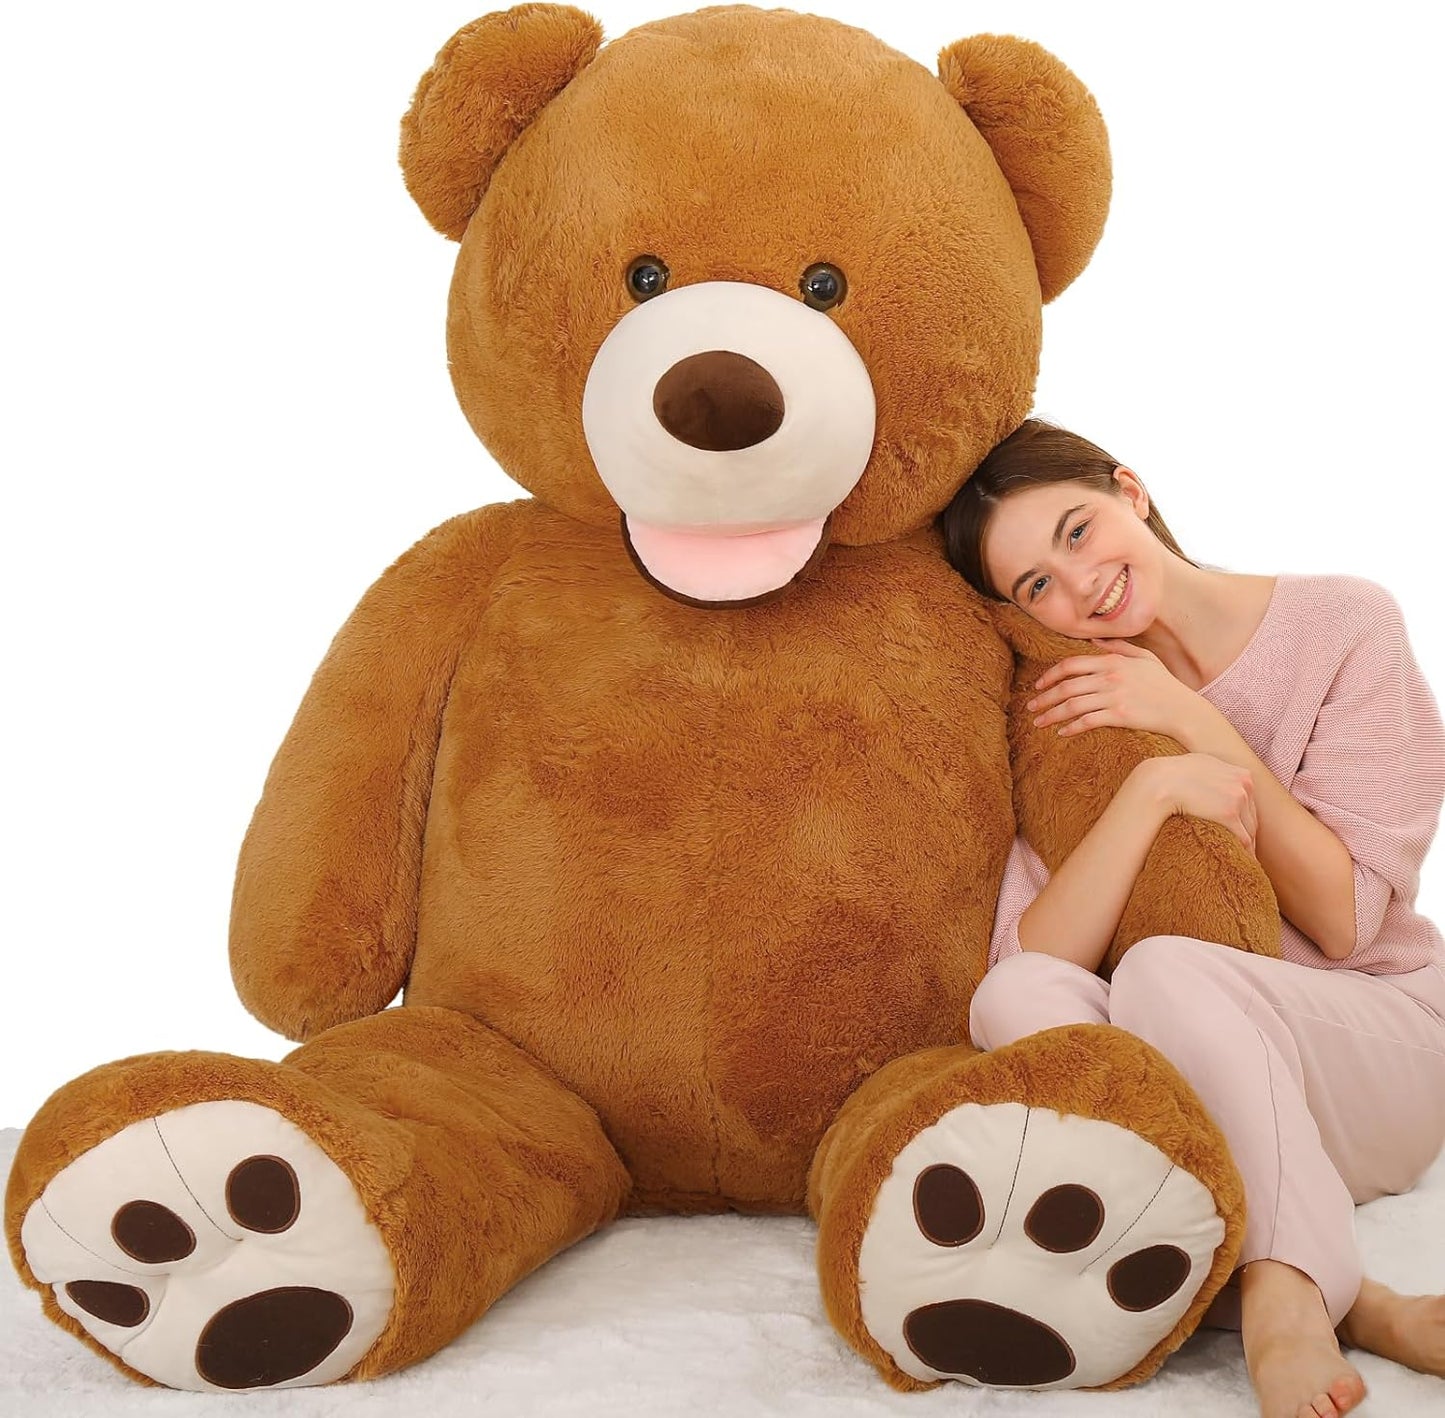 Life Size Teddy Bear Plush Toy, Dark Brown, 6 FT